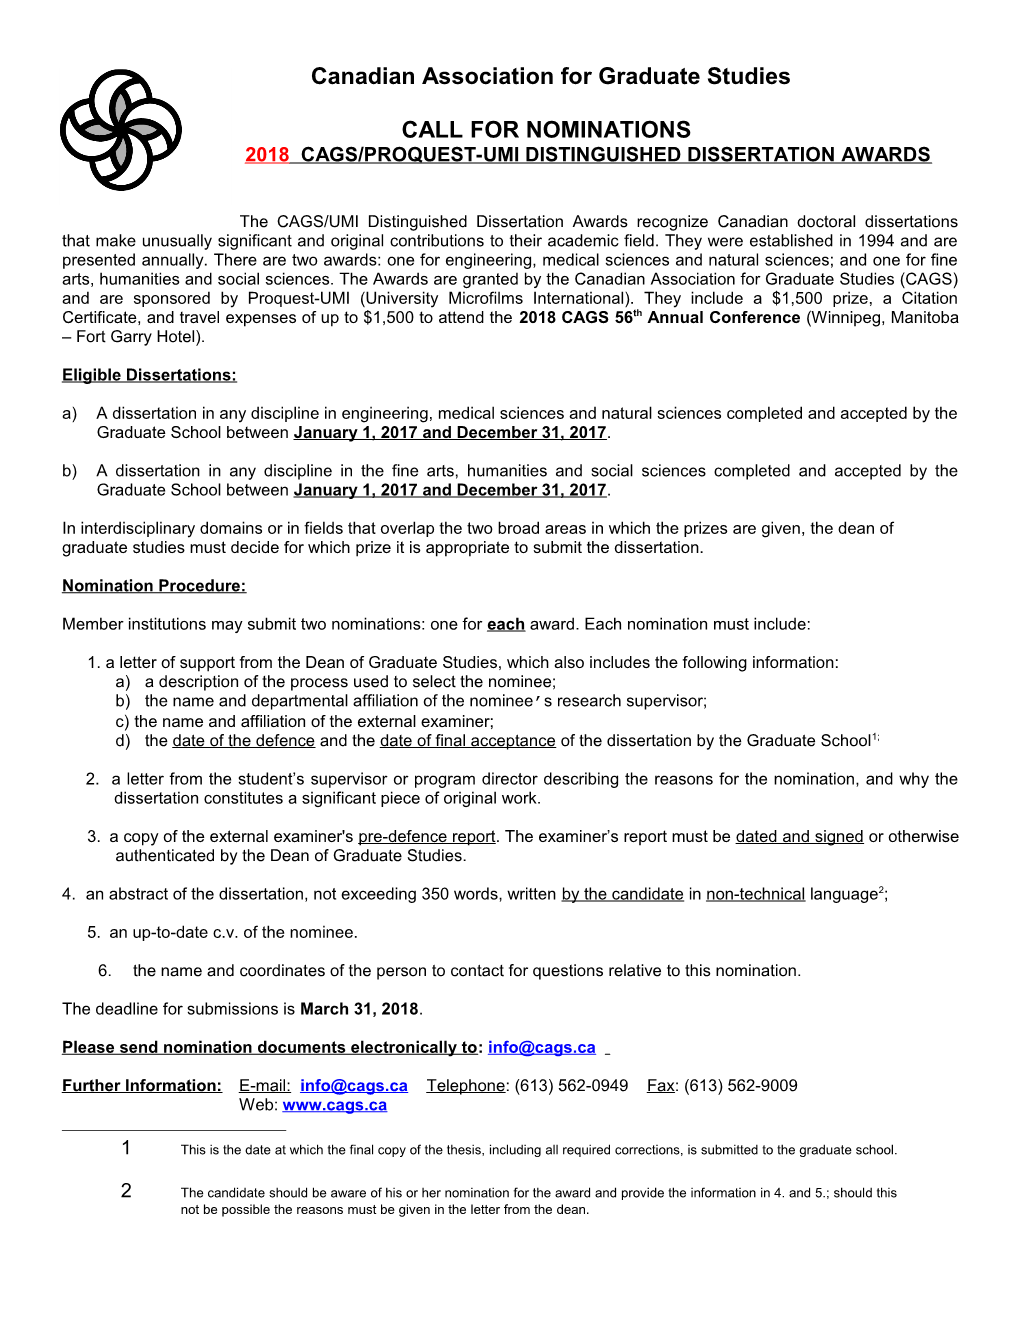 Canadian Association for Graduate Studies